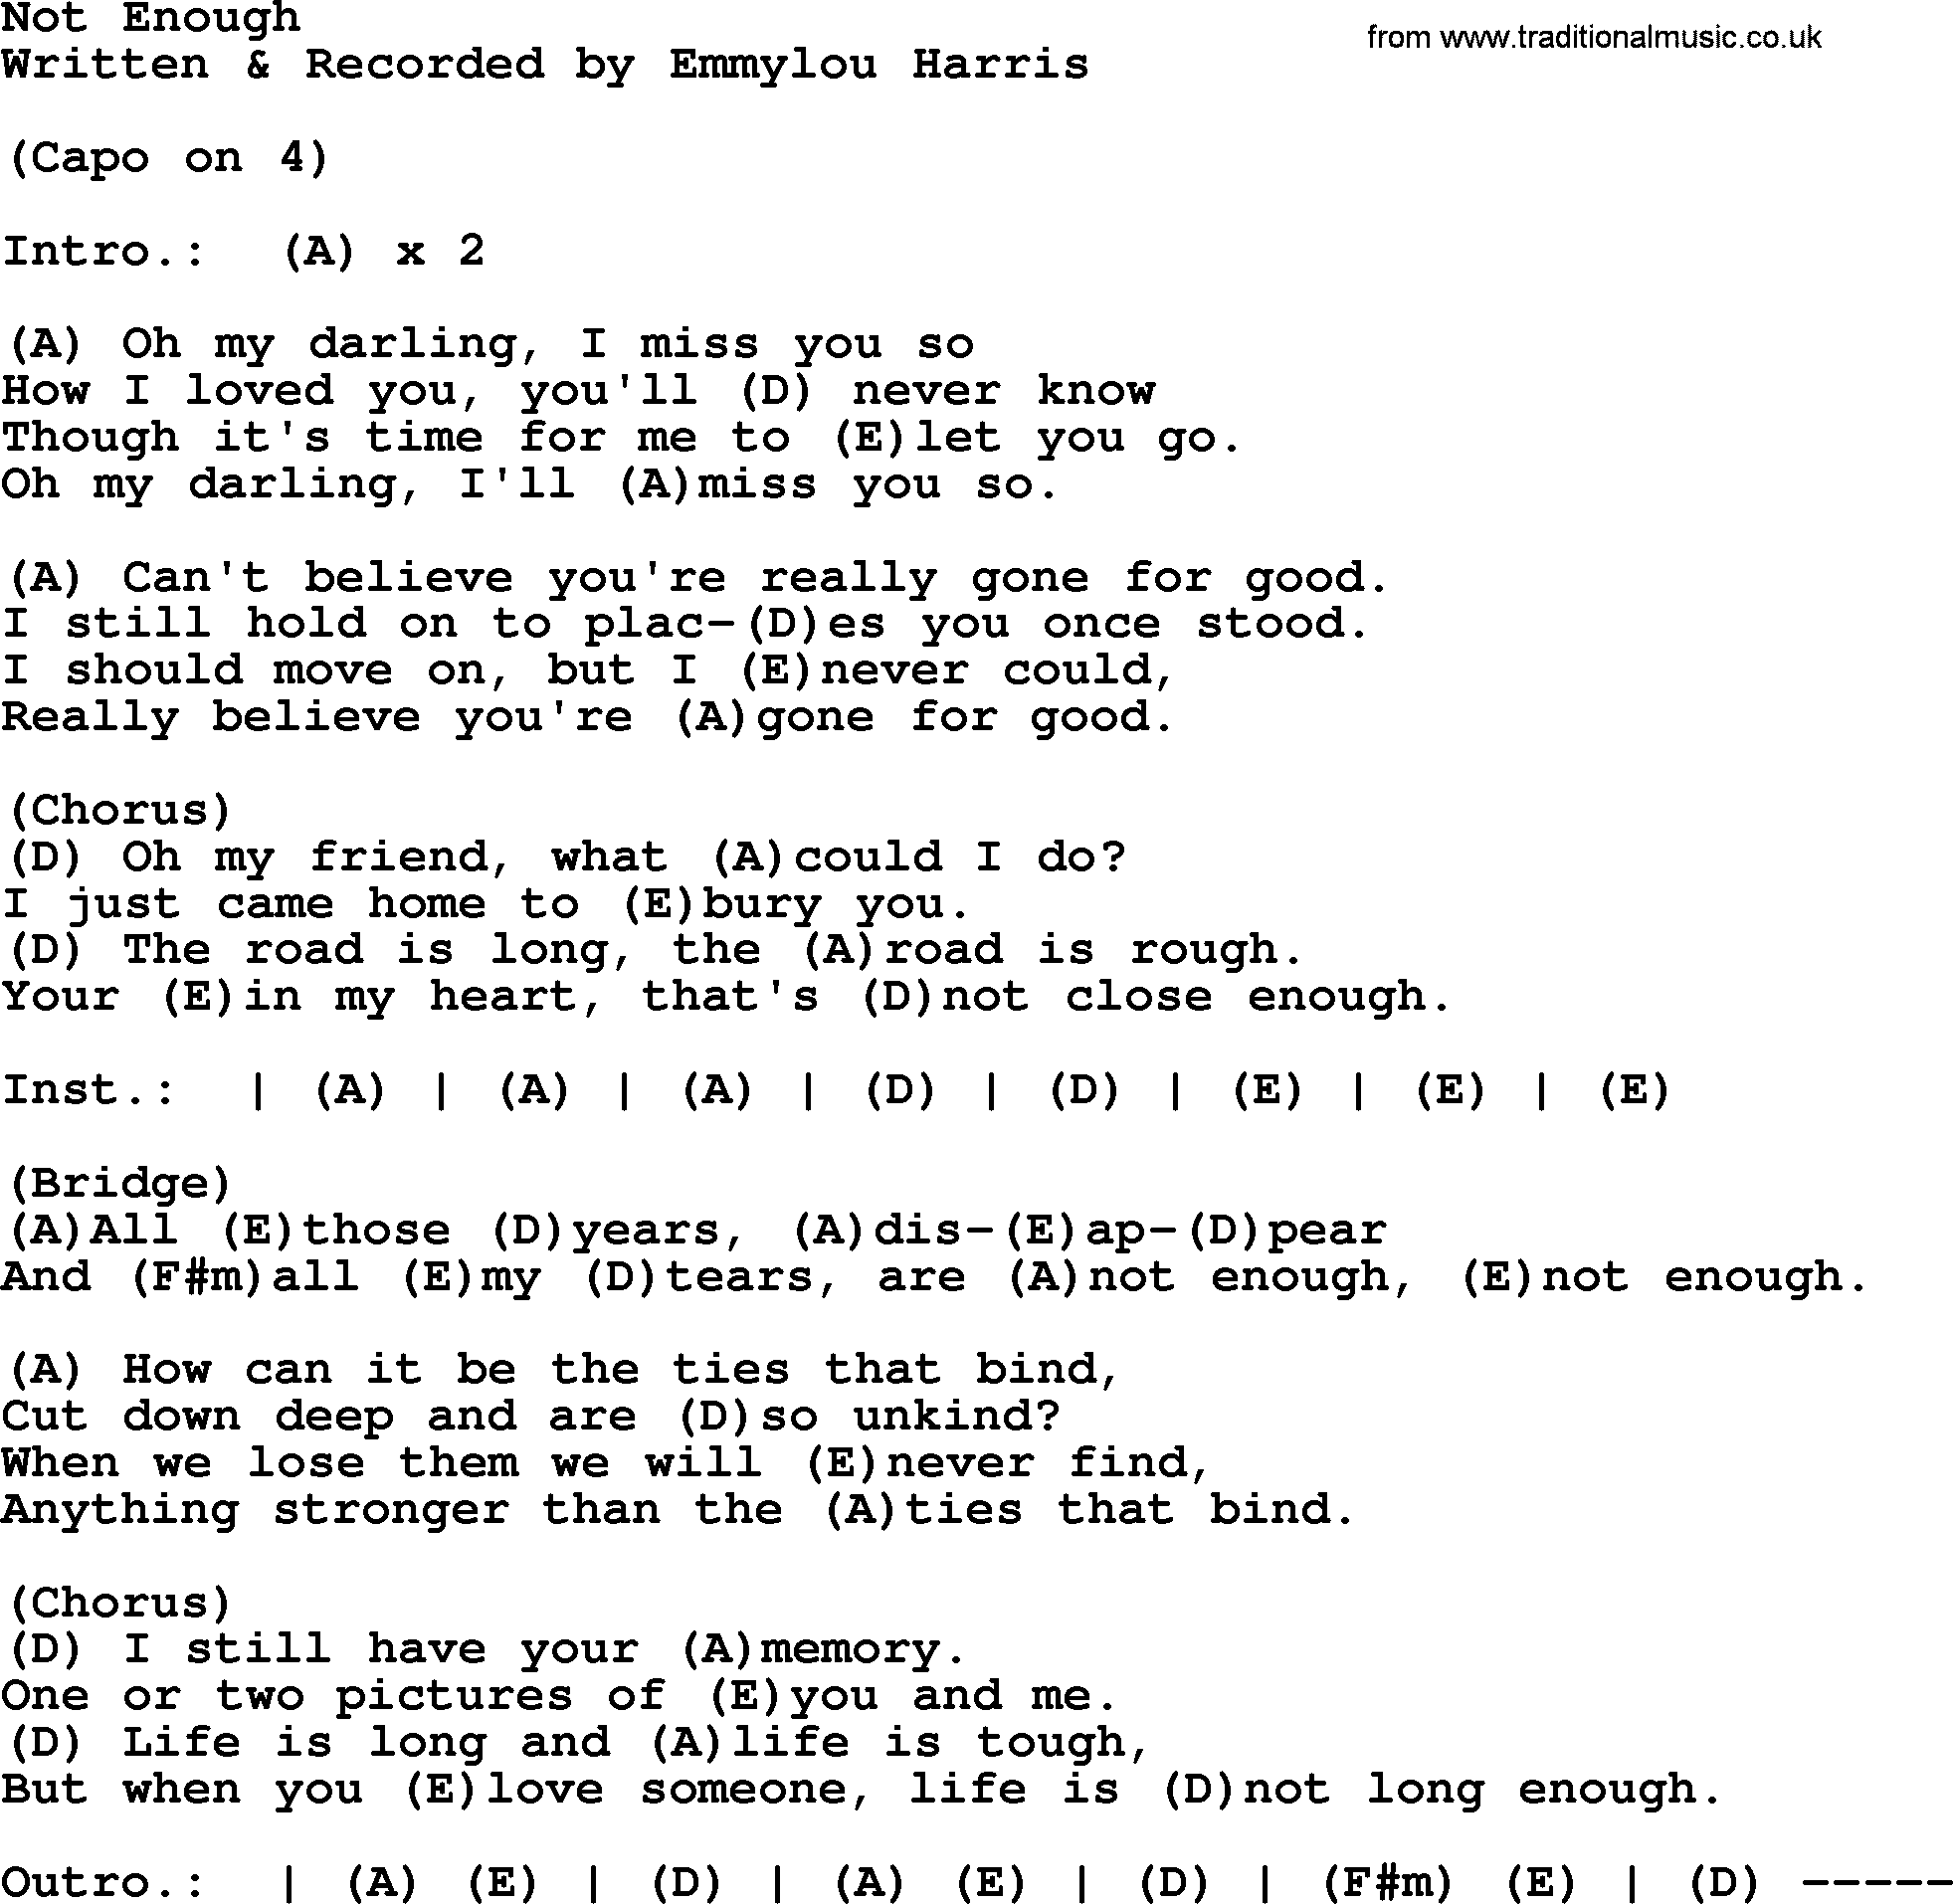 Emmylou Harris song: Not Enough lyrics and chords